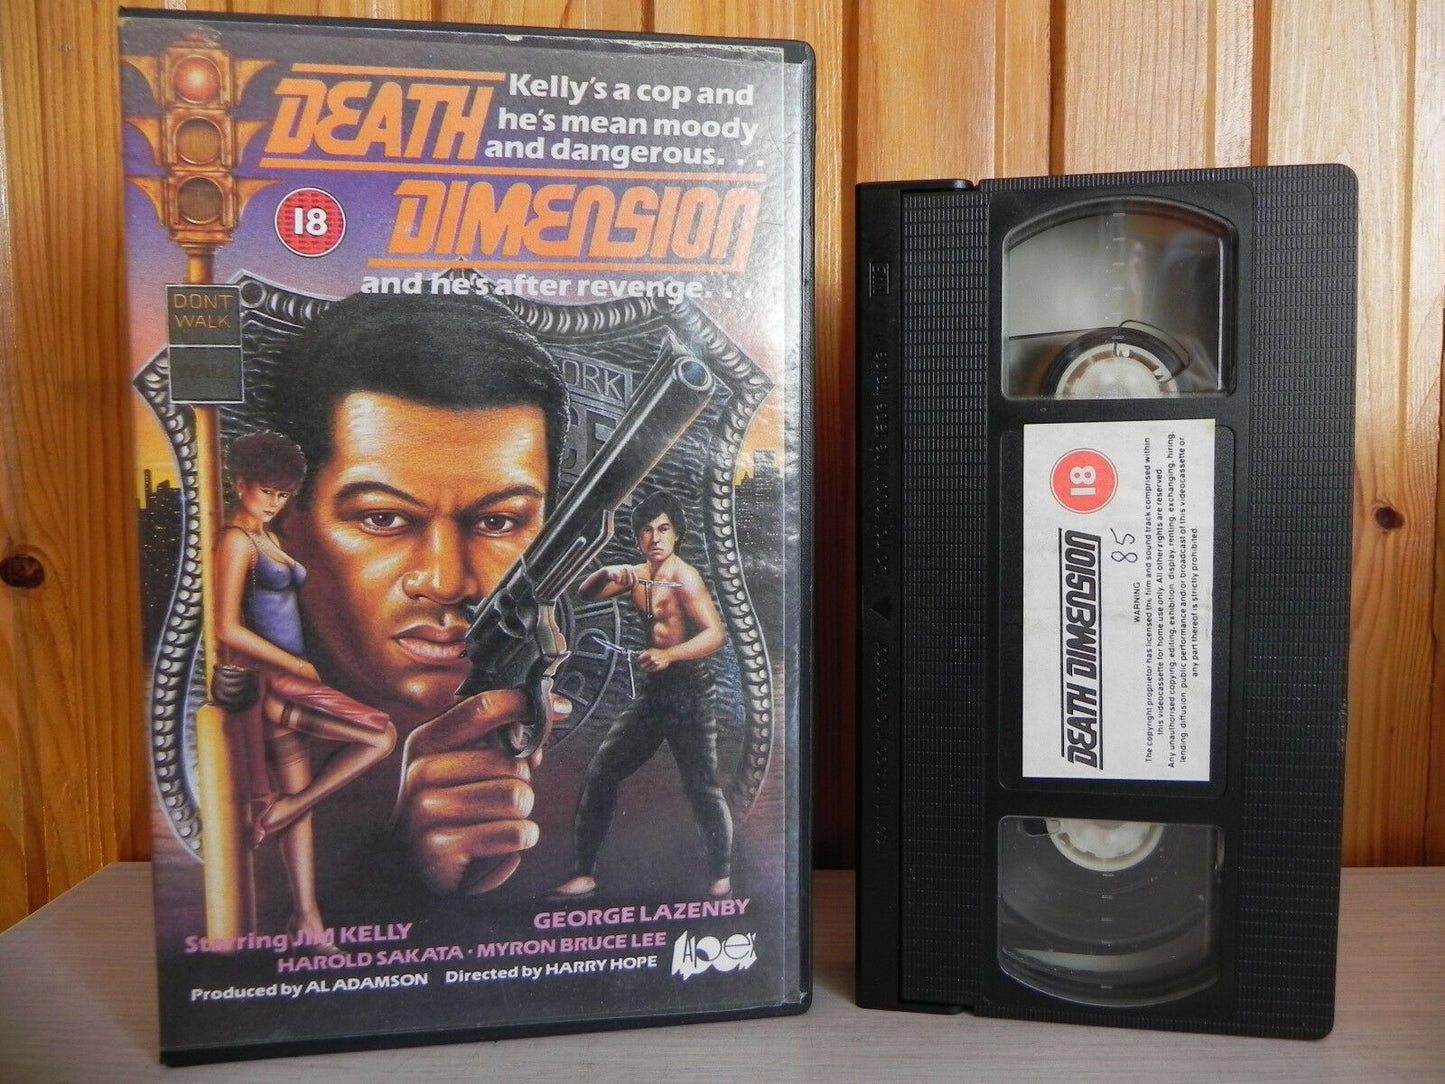 Death Dimension/Icey Death - Jim Kelly - Martial Art Action - Pre Cert Int - VHS-